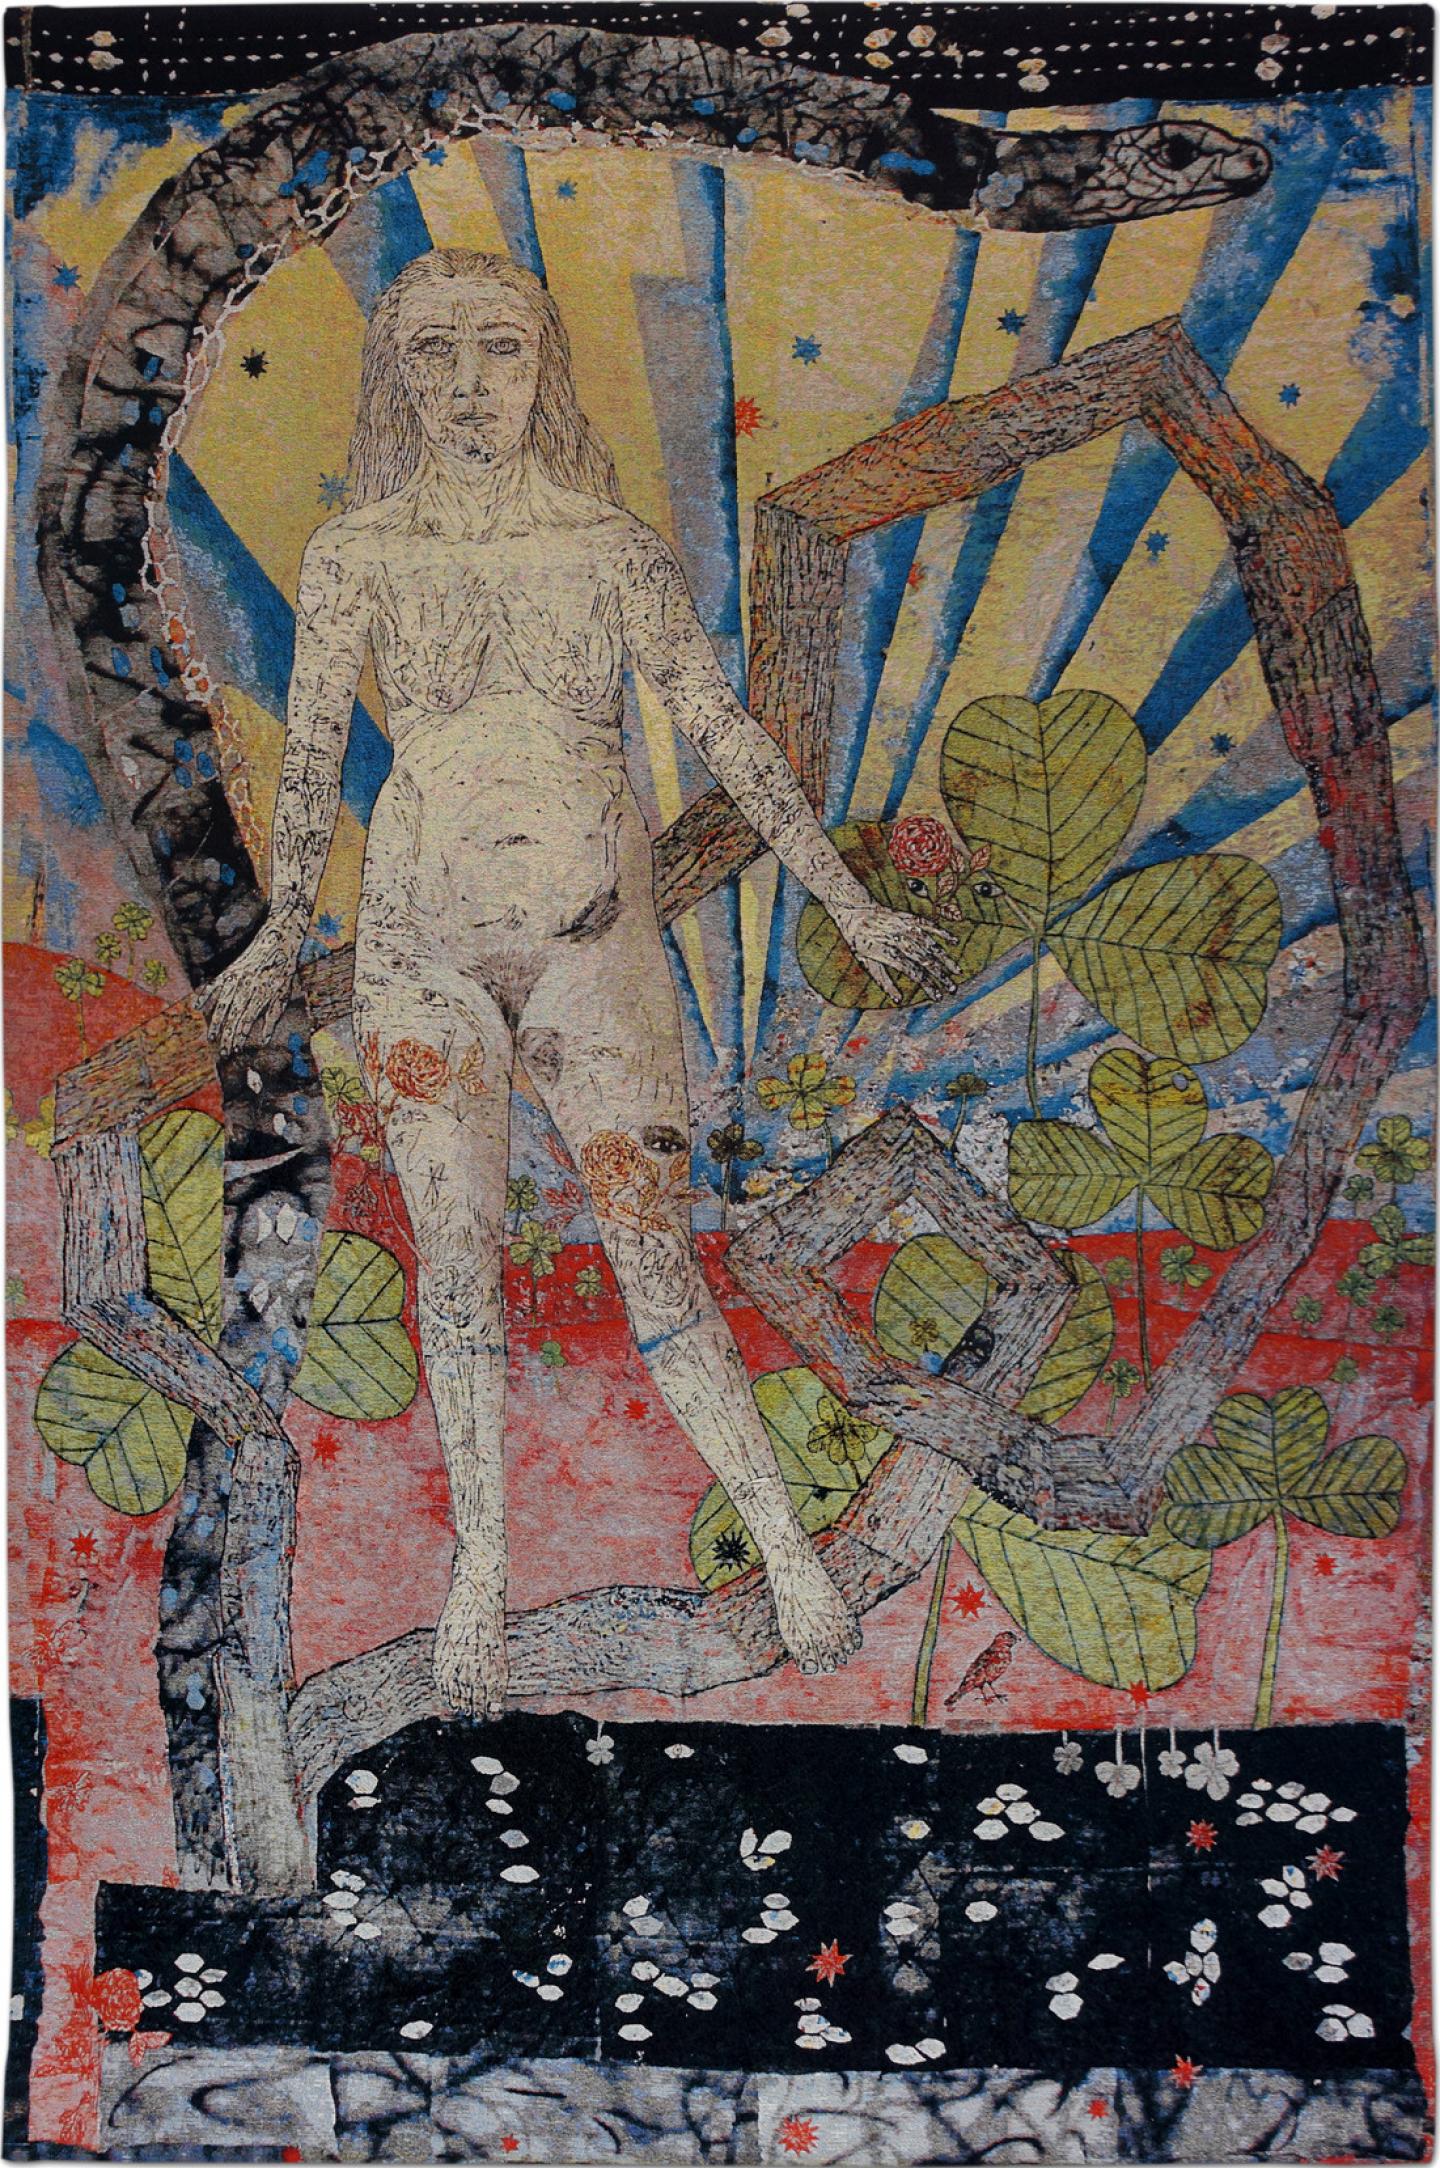 Kiki Smith, Earth, 2012, cotton Jacquard tapestry, 9' 5" × 76' (287 cm × 2,316.5 cm) © Kiki Smith